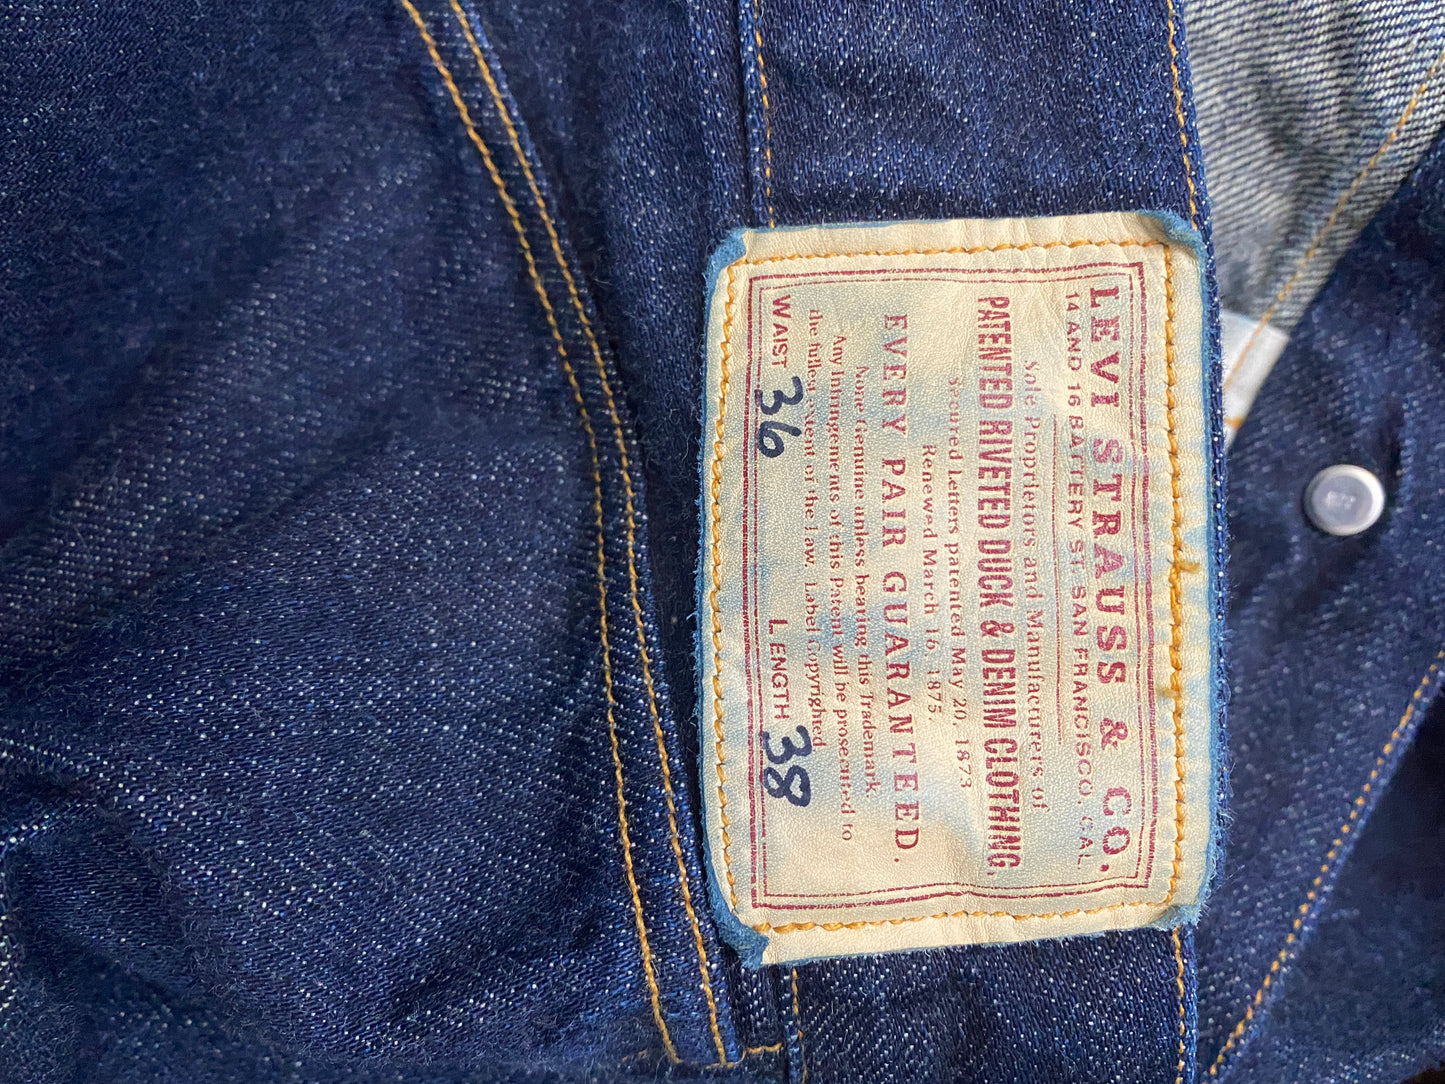 LEVIS LVC 1878 Cinch back Selvedge Denim Made in USA Jeans Buckleback 36" Waist